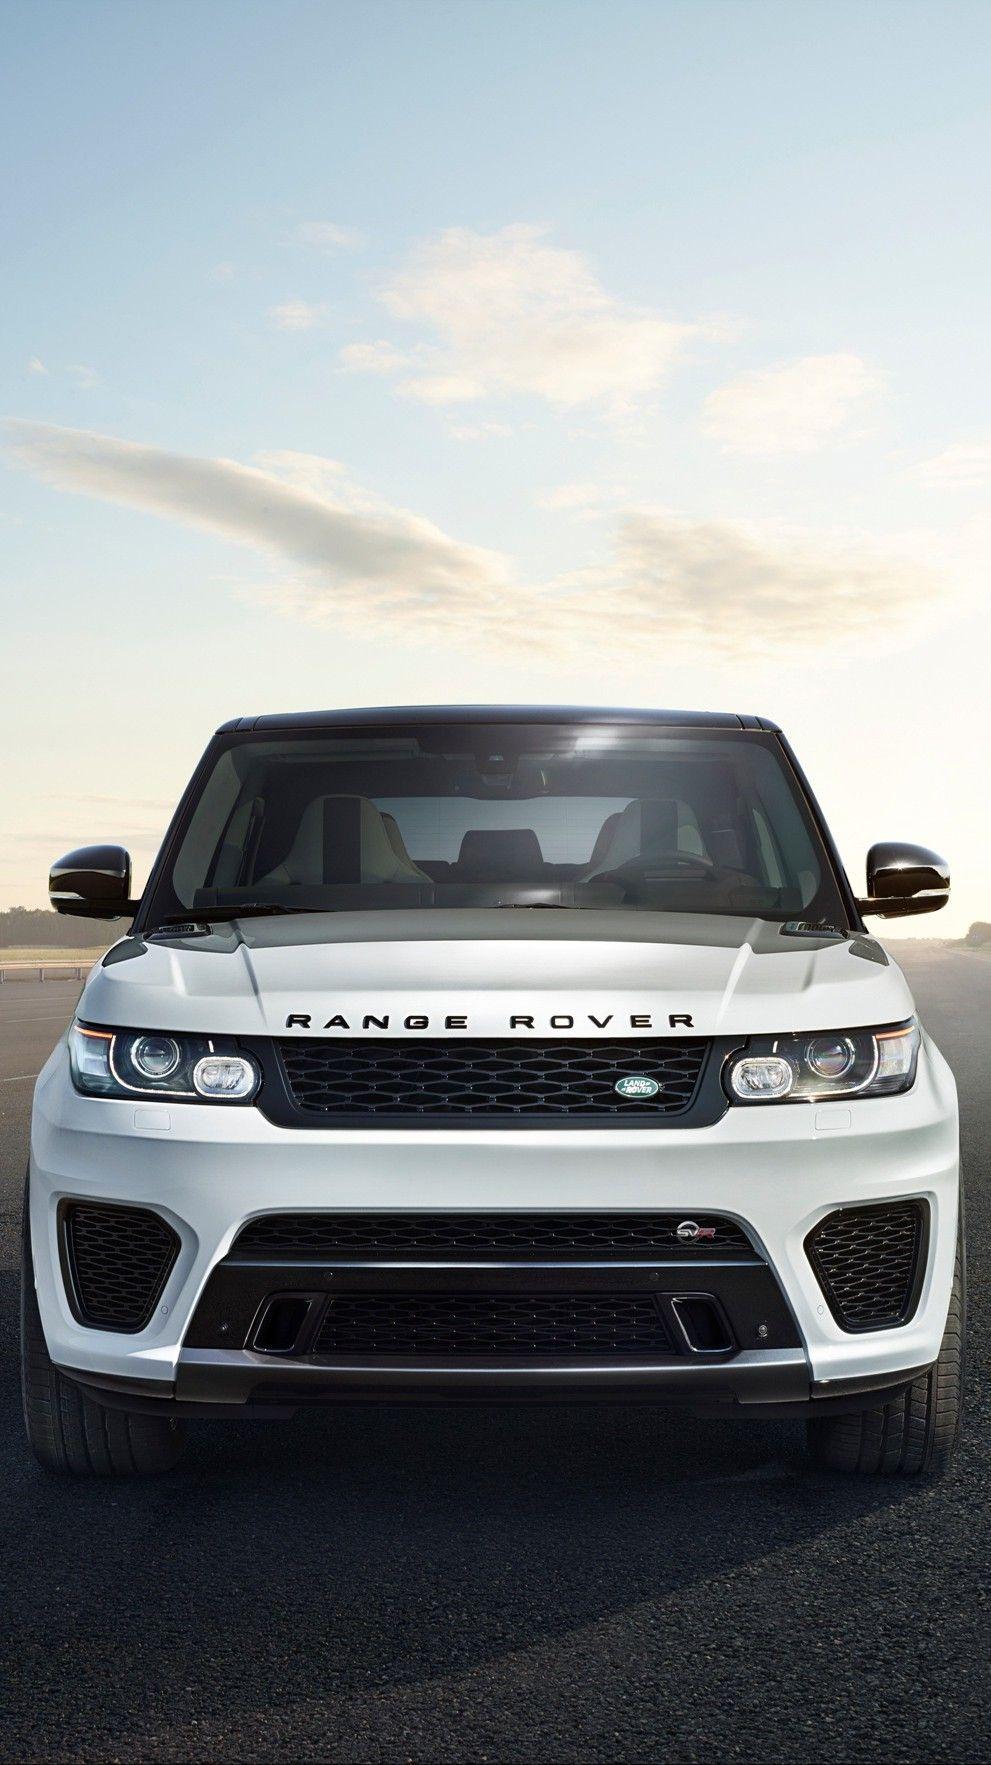 Range Rover Car Images Free Download